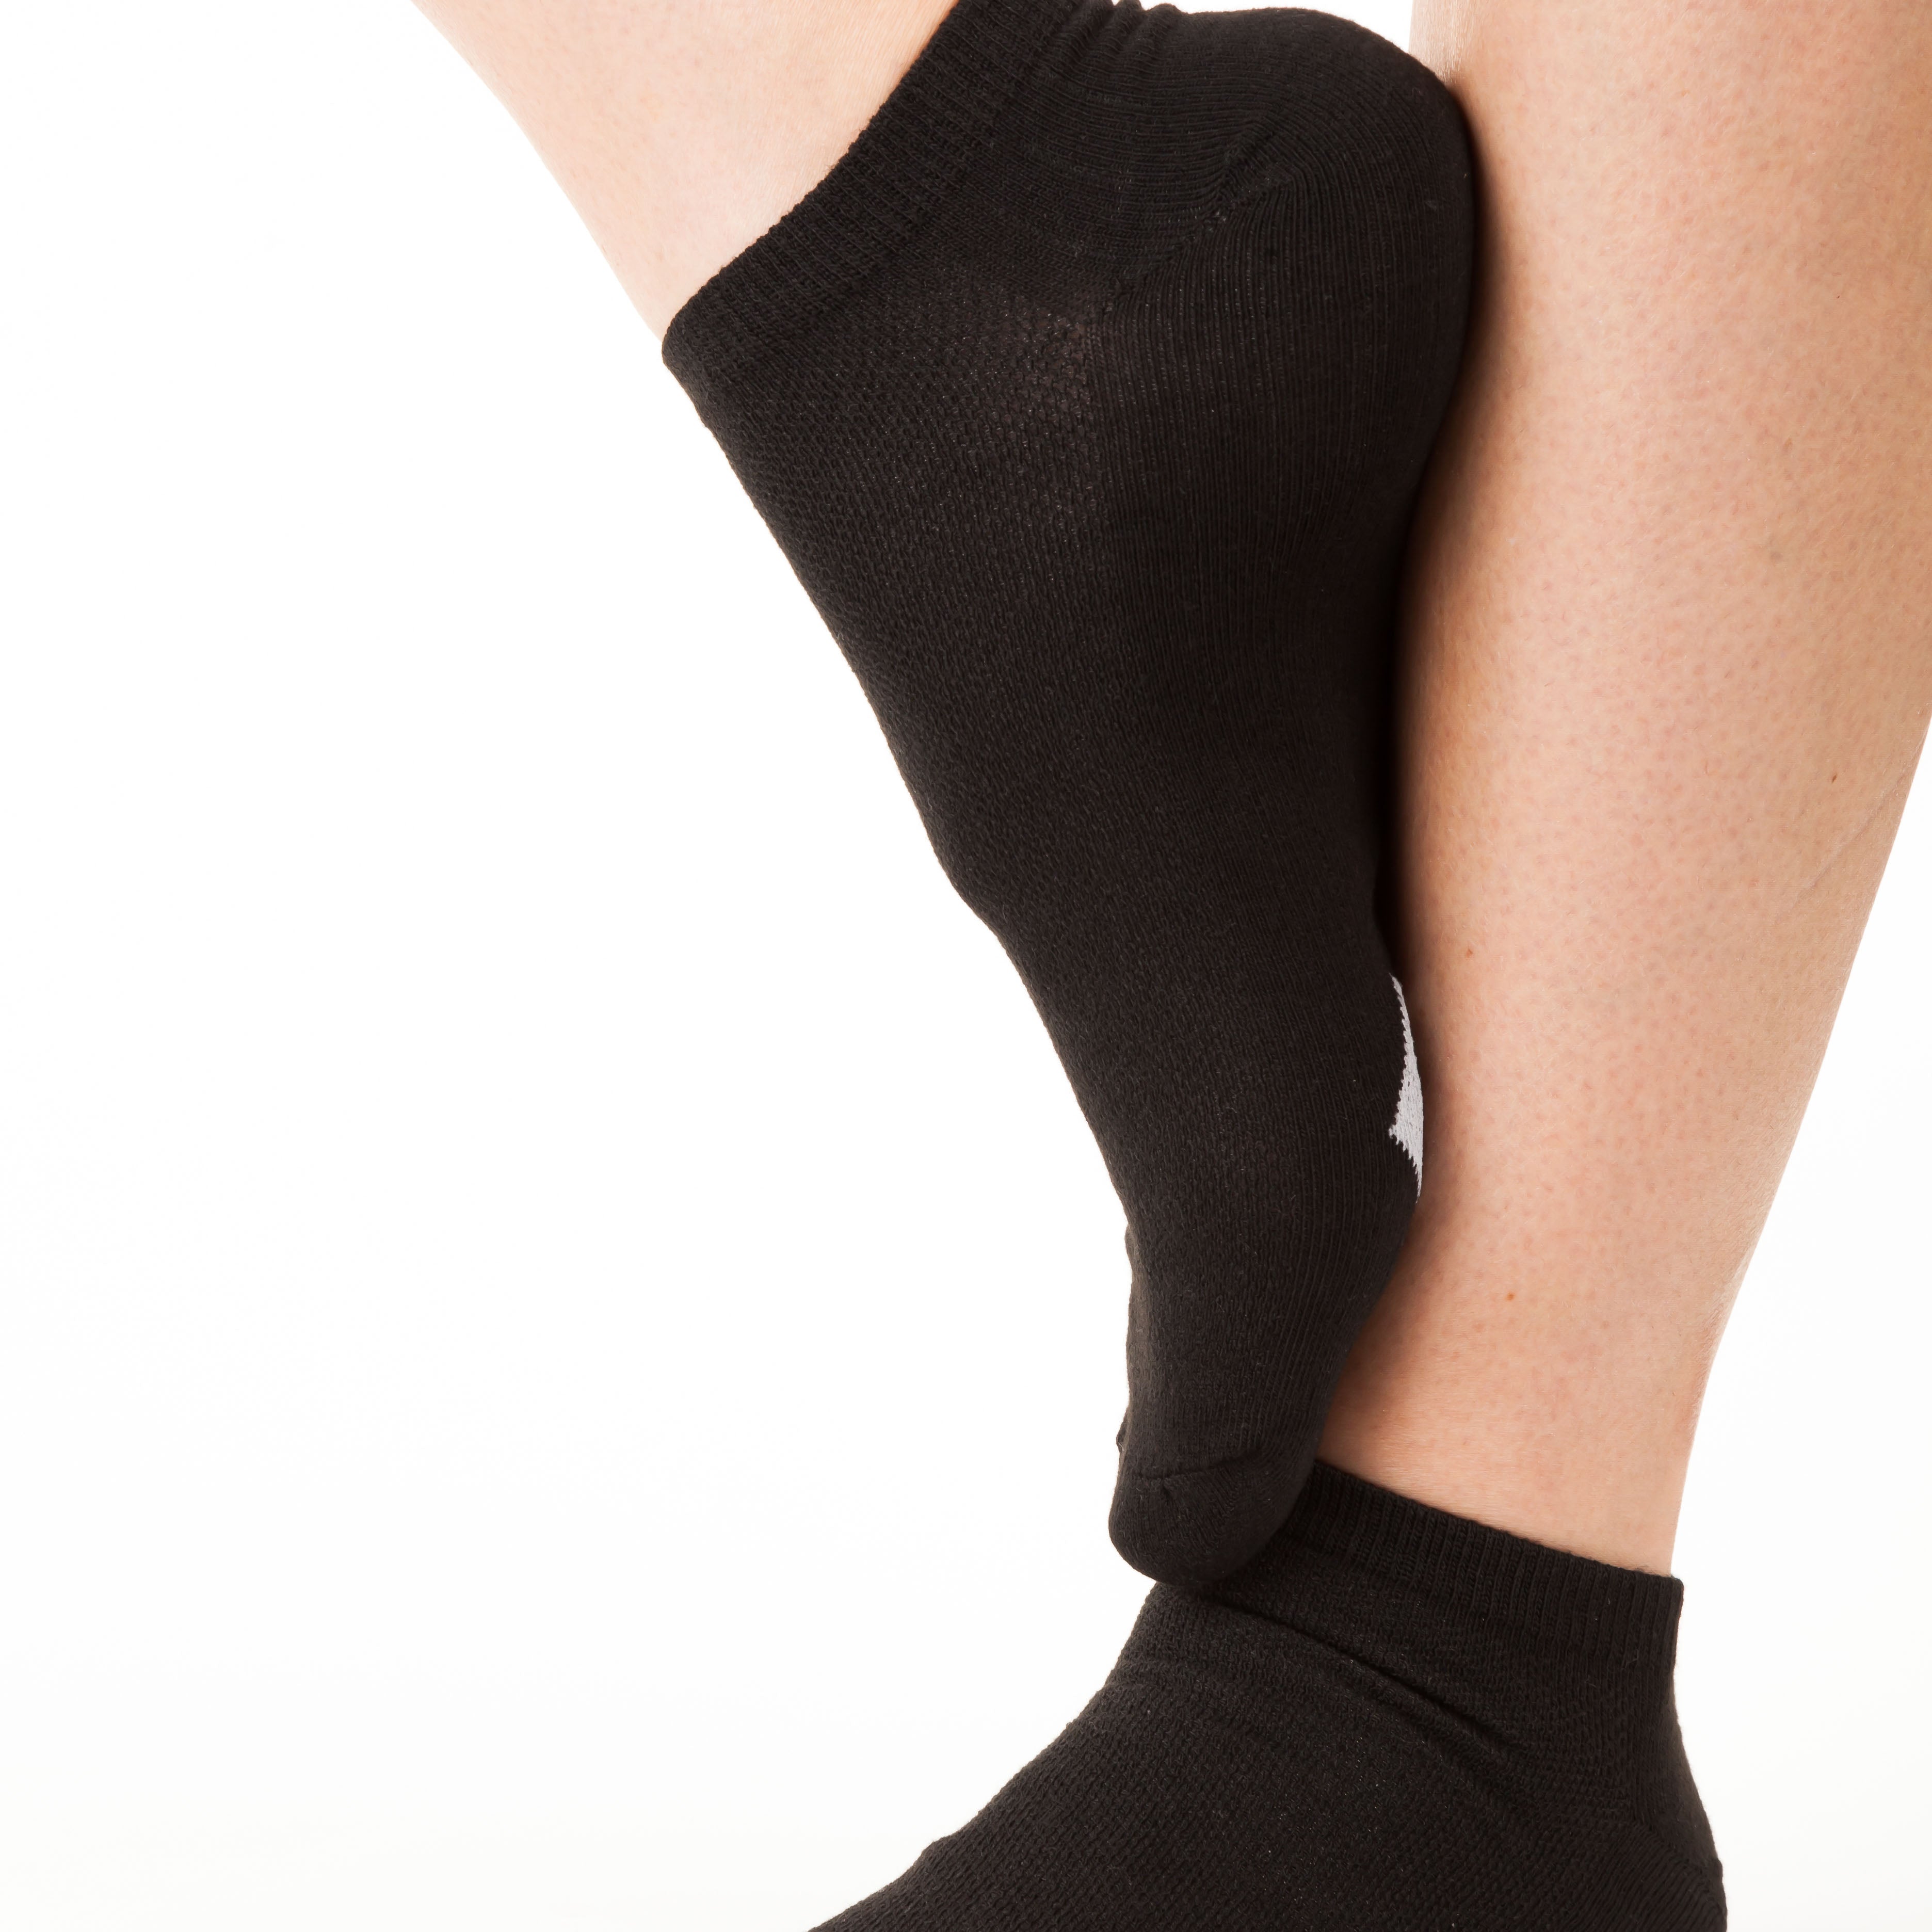 Apollo Socks - The World's Cleanest Socks - HercLeon